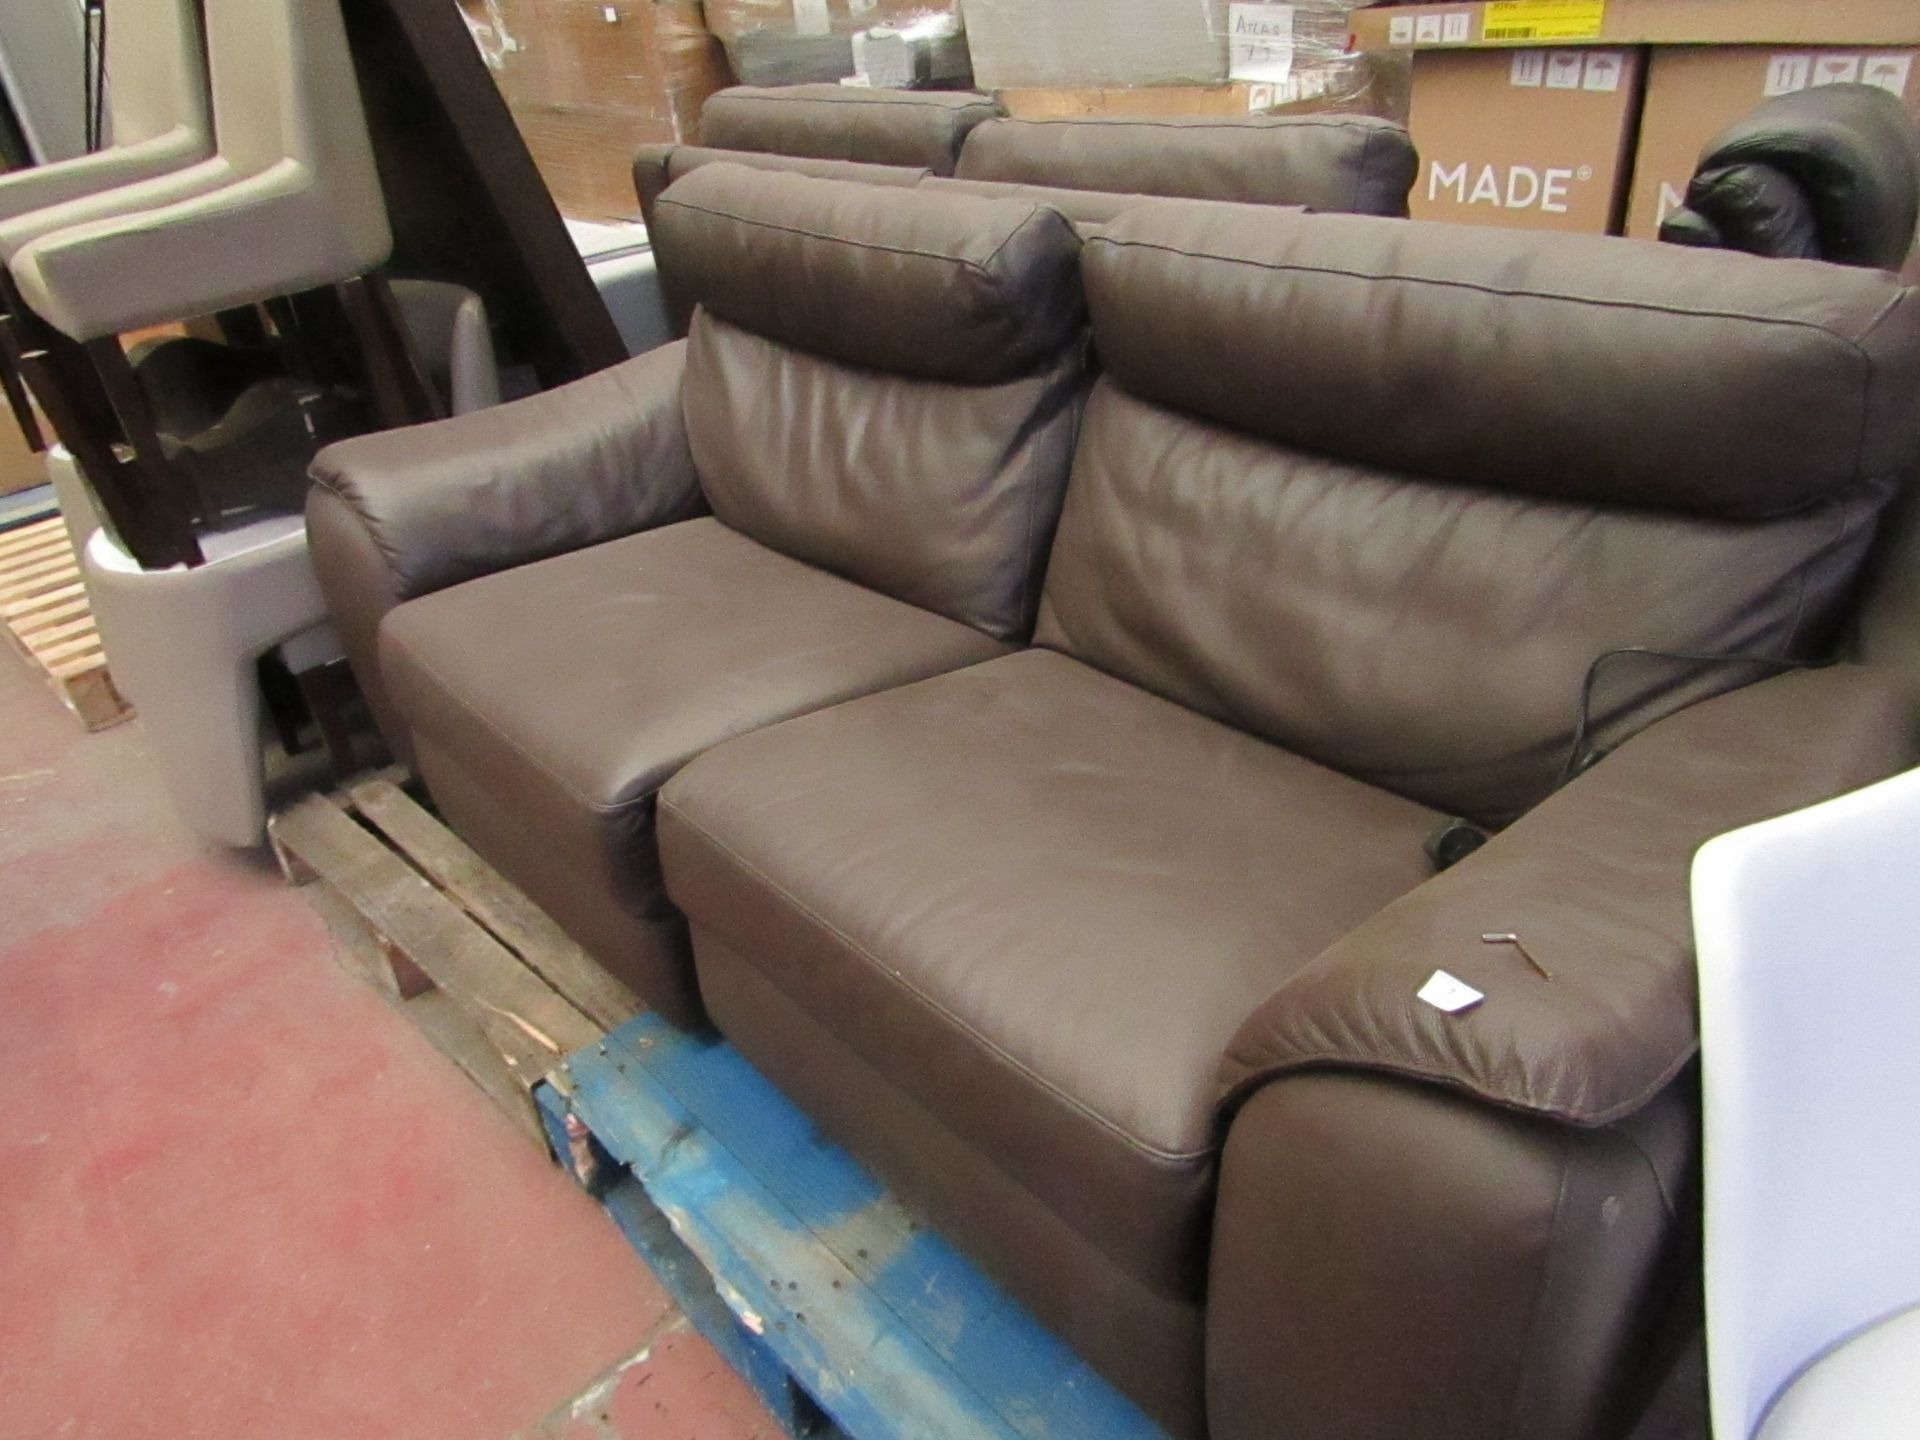 Costco 3 seater leather sofa, no major damage.